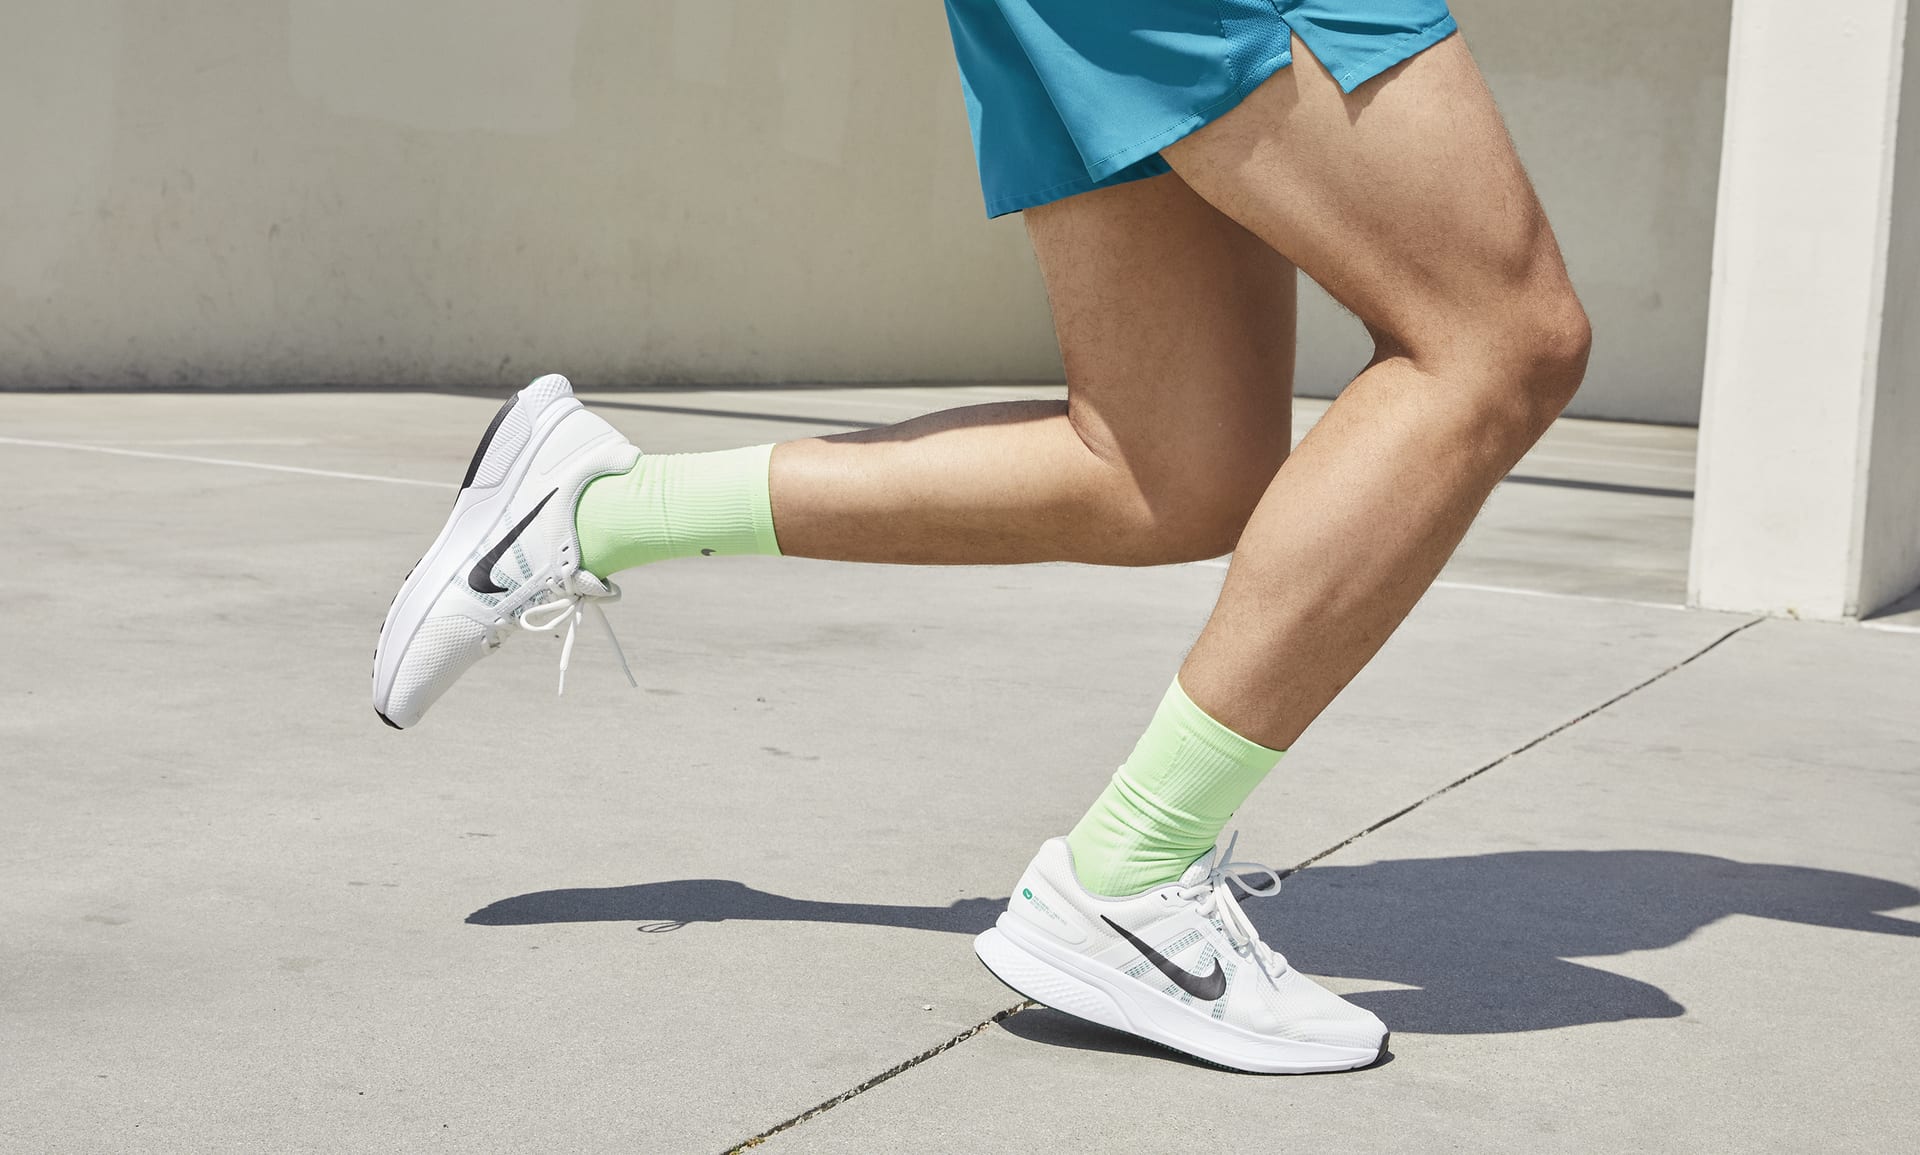 Nike Homme Run Swift 2 Men's Running Shoe, Midnight Navy/White